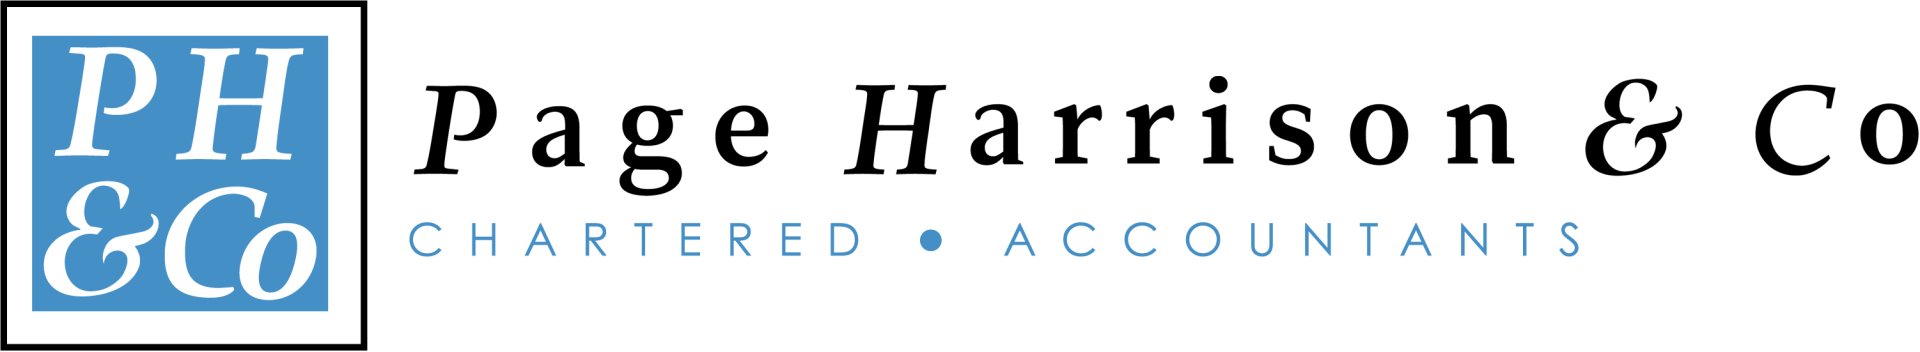 Page Harrison & Co Chartered Accountants